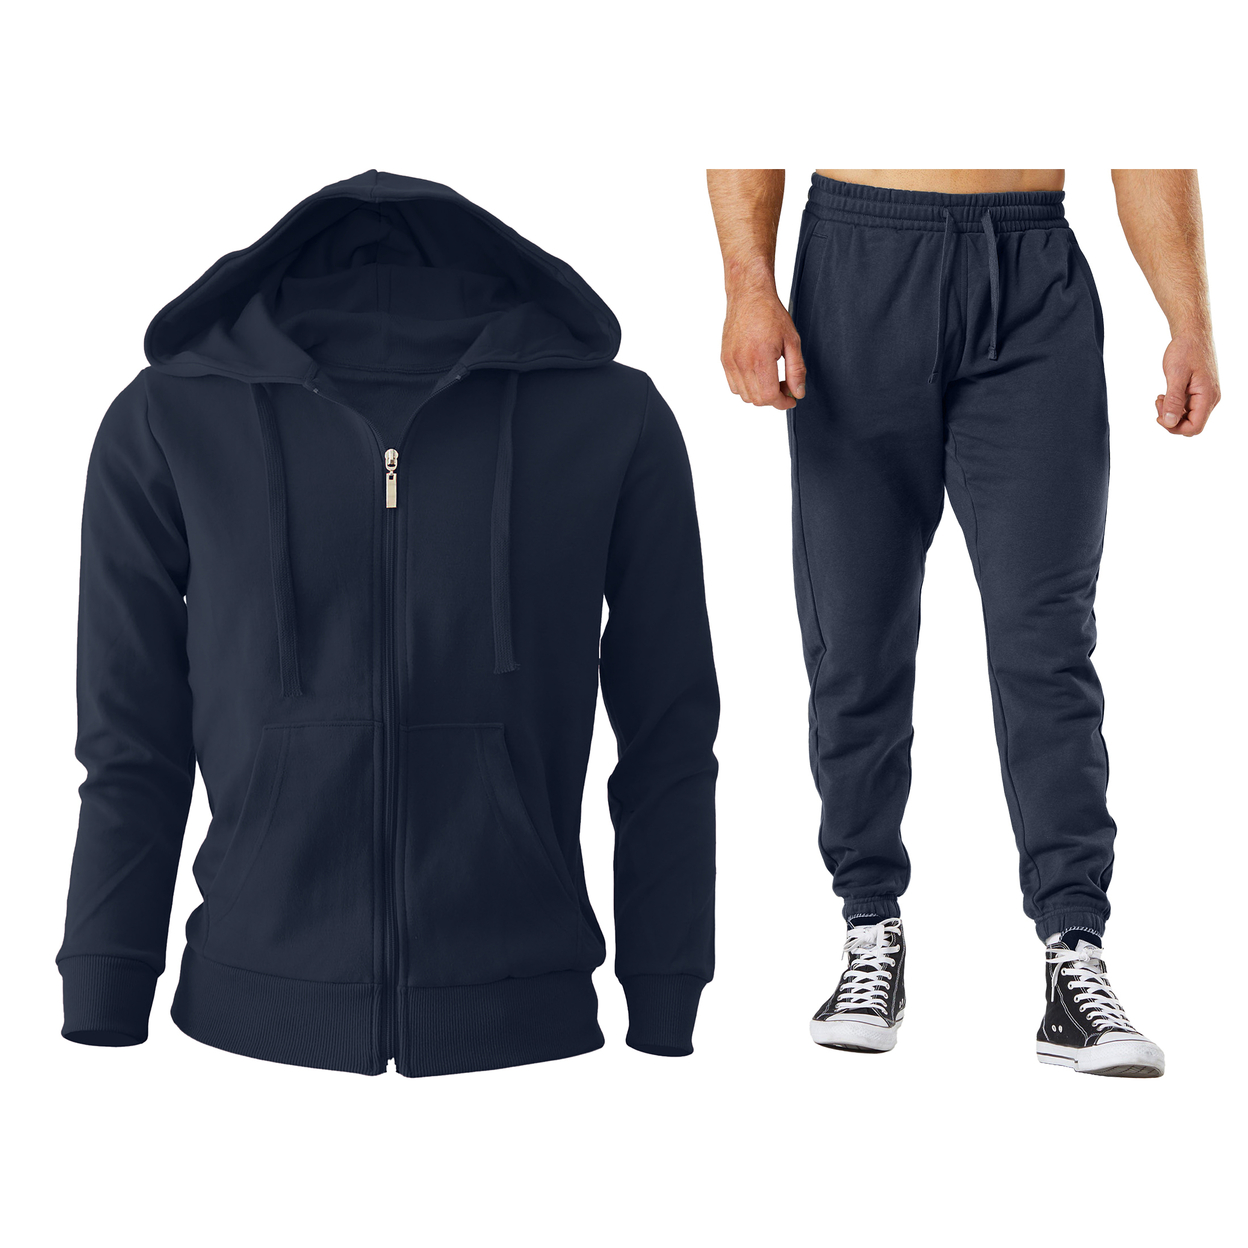 2/4-Piece: Men's Winter Warm Cozy Athletic Multi-Pockets BIG & TALL Sweatsuit Set - Navy, 1, Small